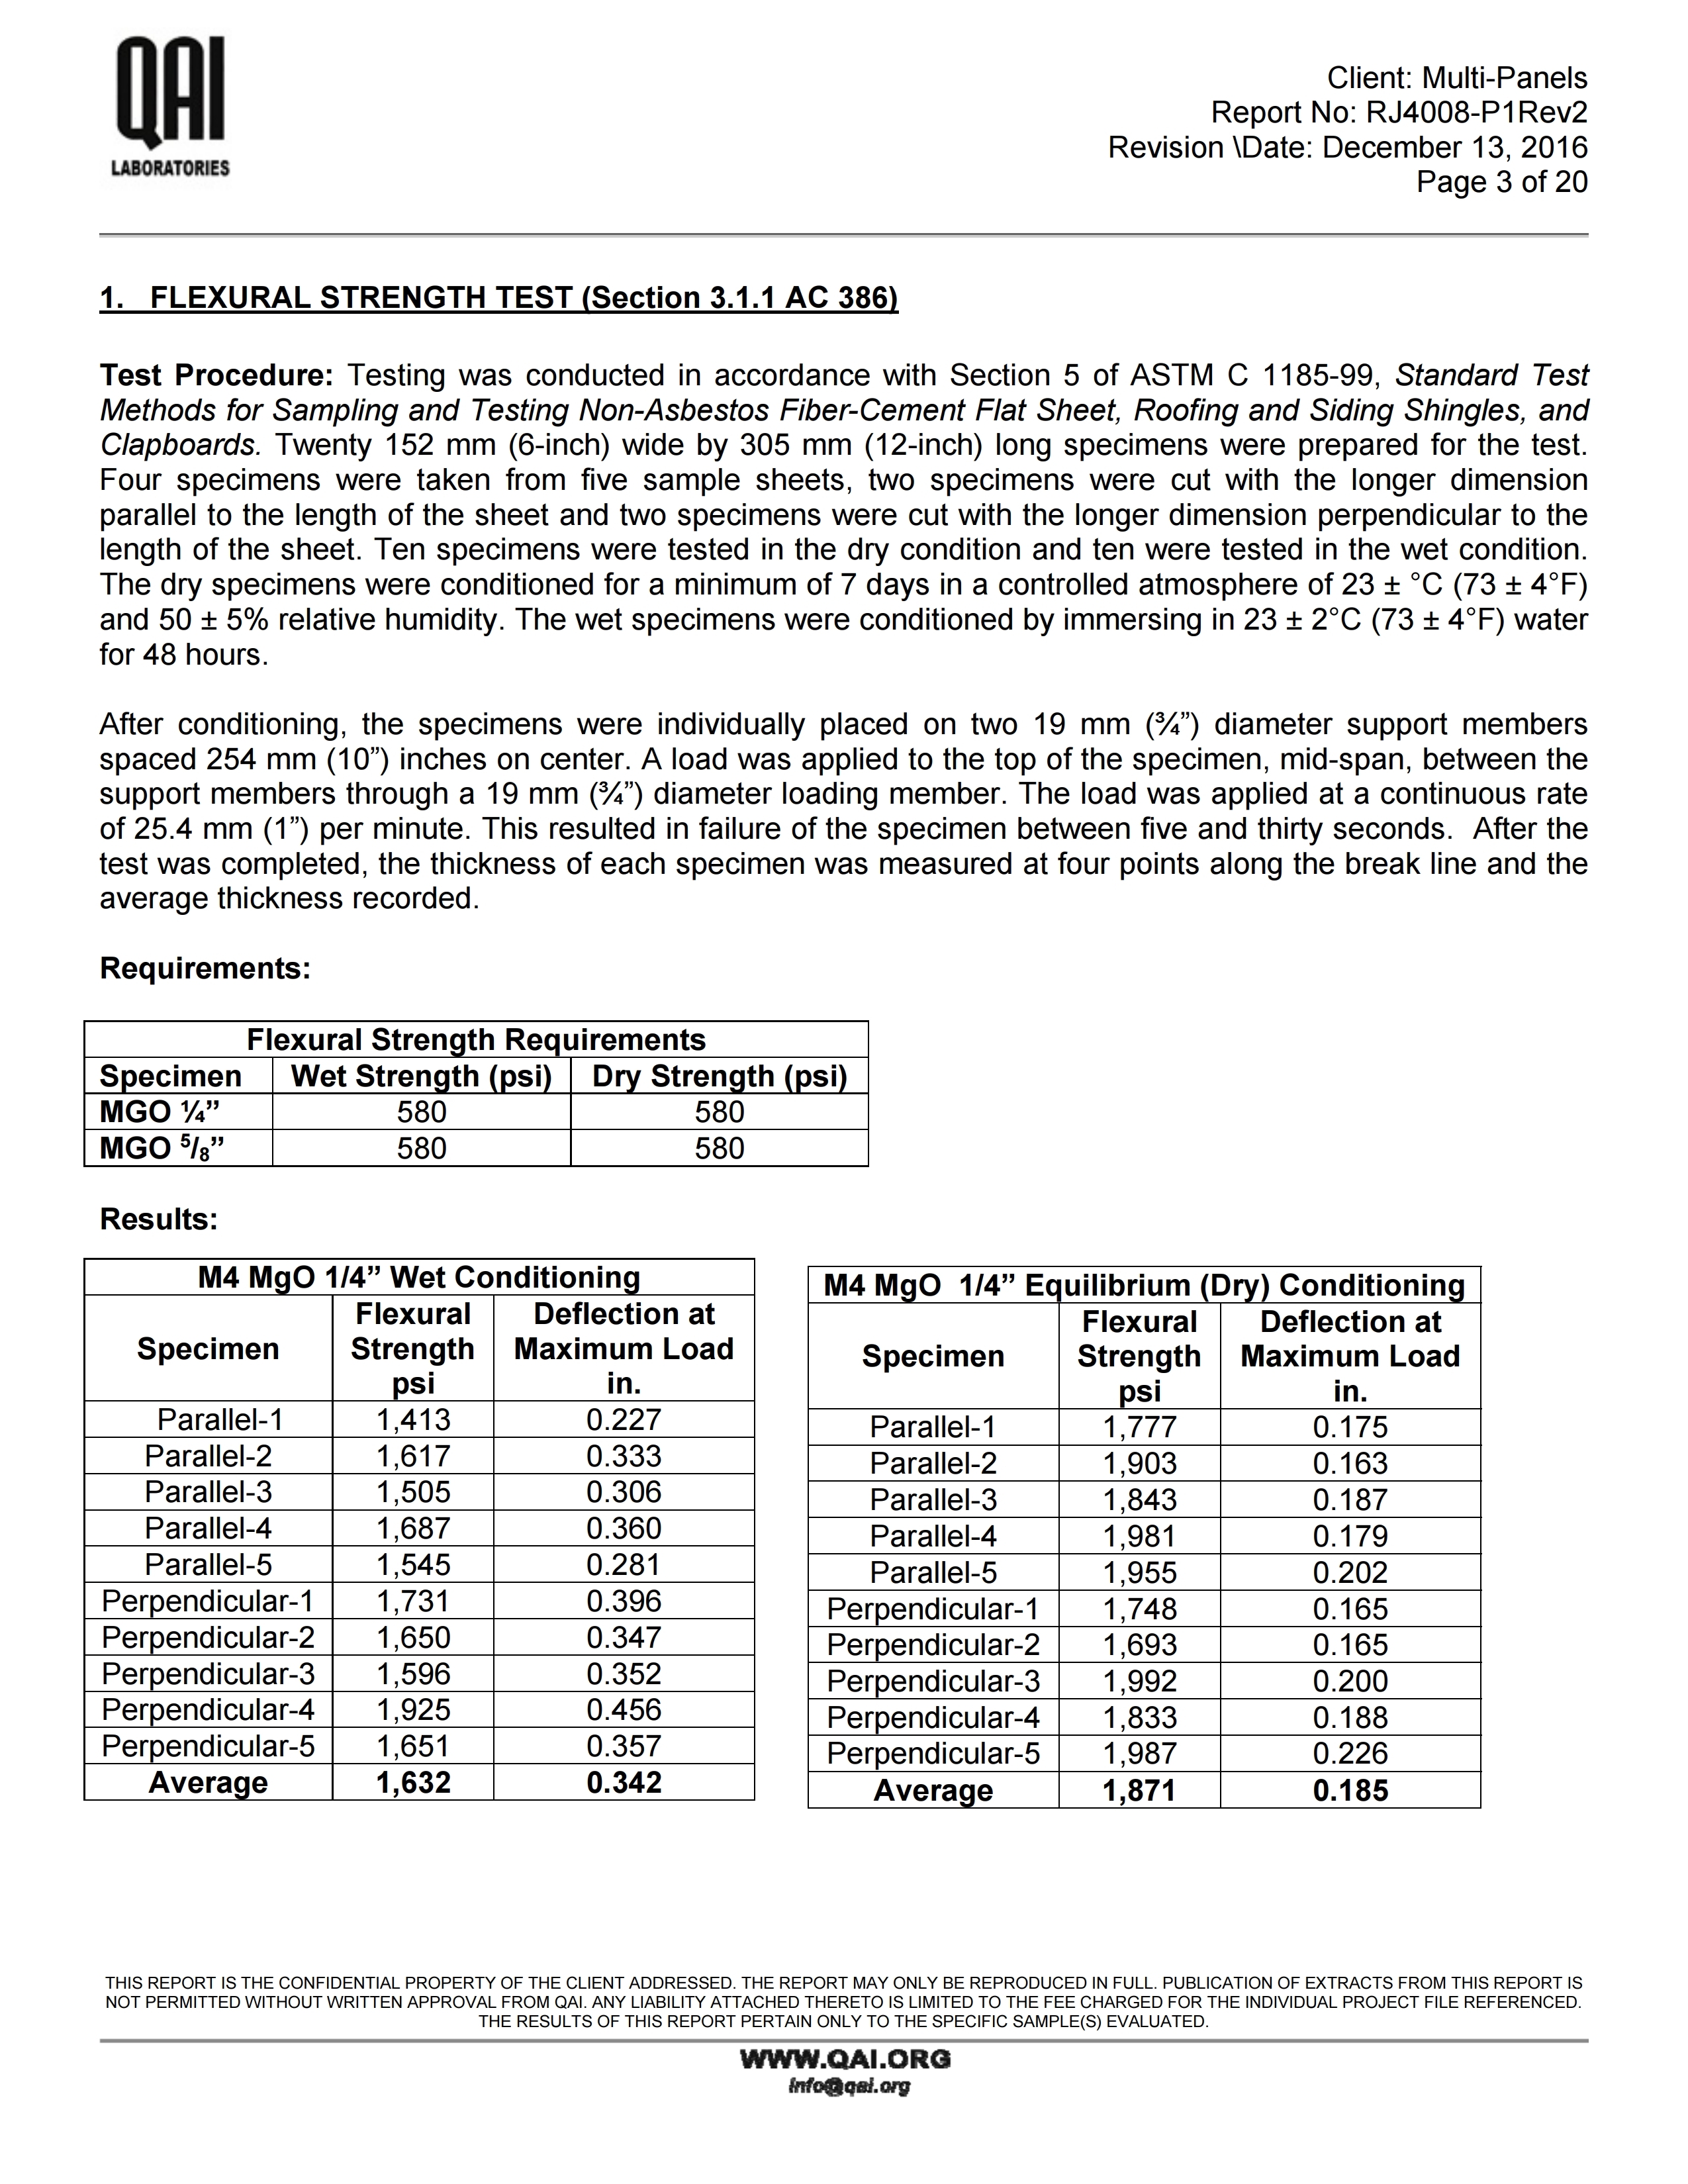 RJ4008-P1REV2-Multi-Panels-M4-AC386 Report-13122016 (2).pdf_page_03.jpg